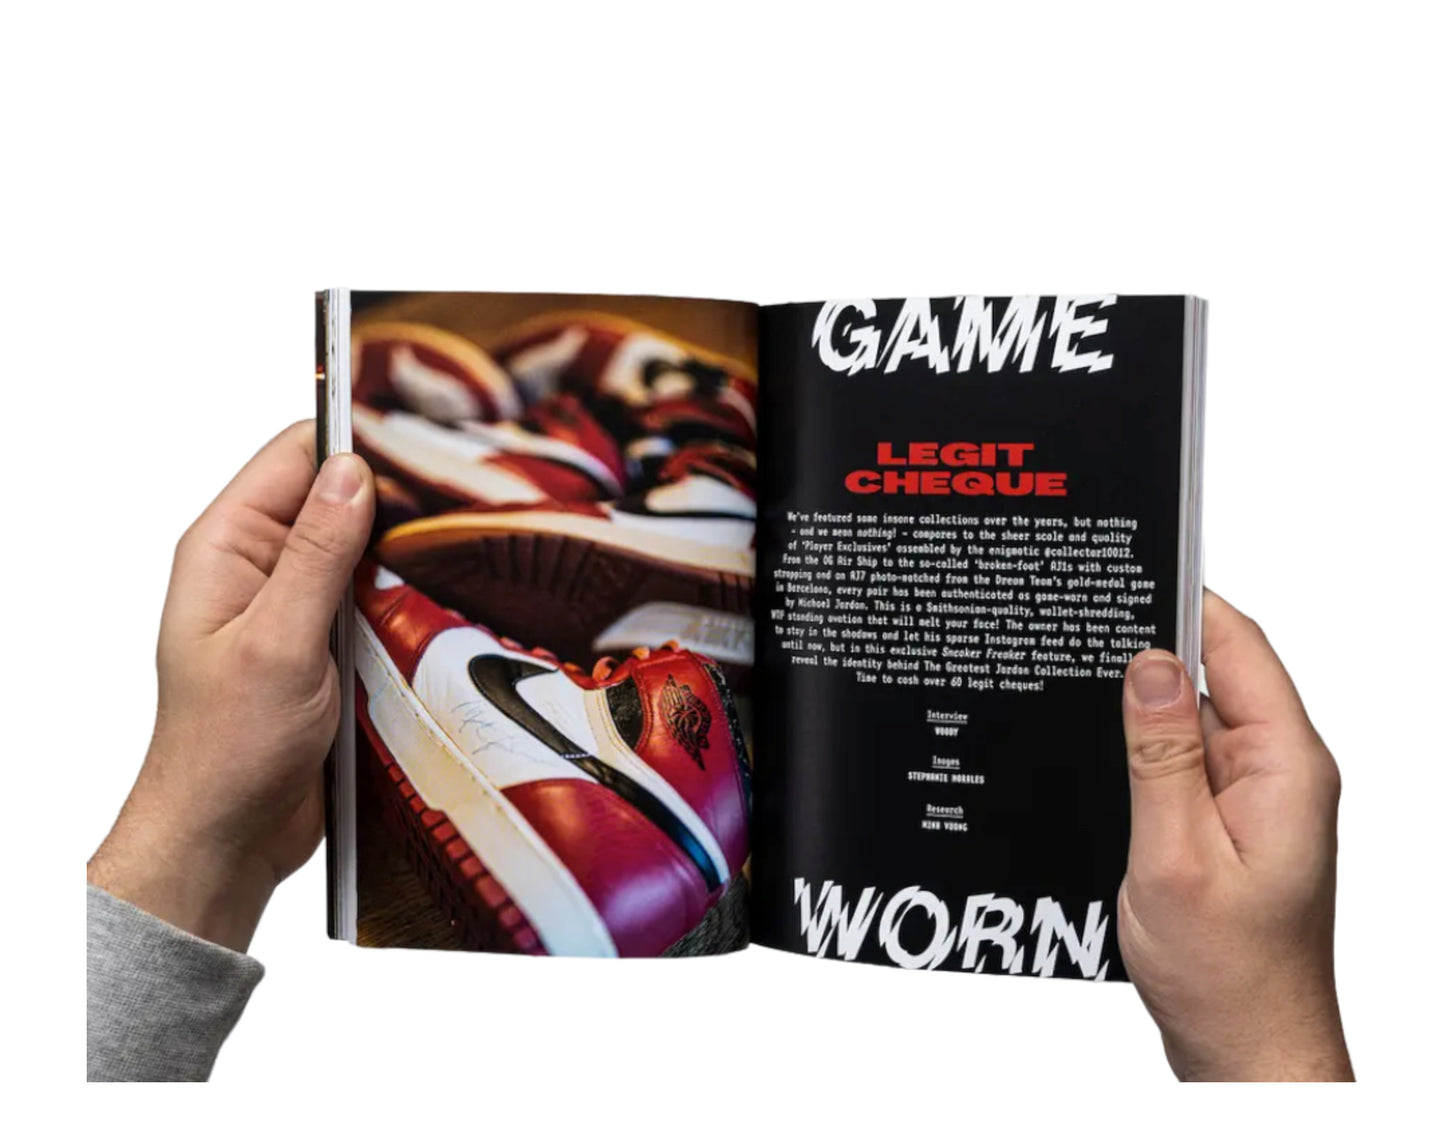 Sneaker Freaker Magazine Issue # 48 - RARE AIR! - Jordan Bonanza